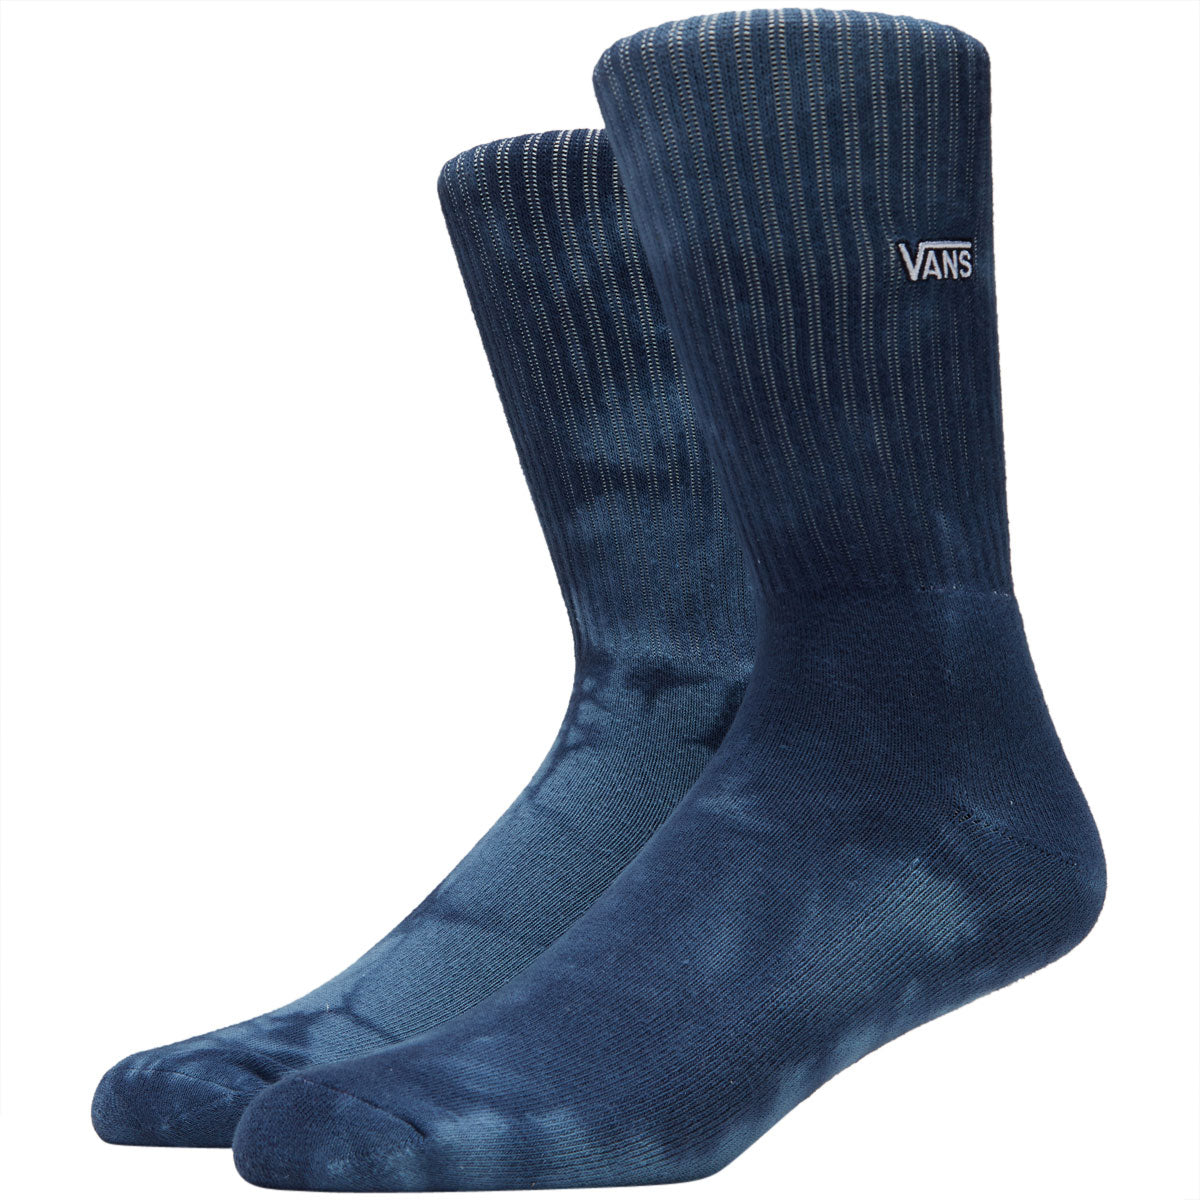 Vans Seasonal Tie Dye Crew II Socks - Copen Blue image 1